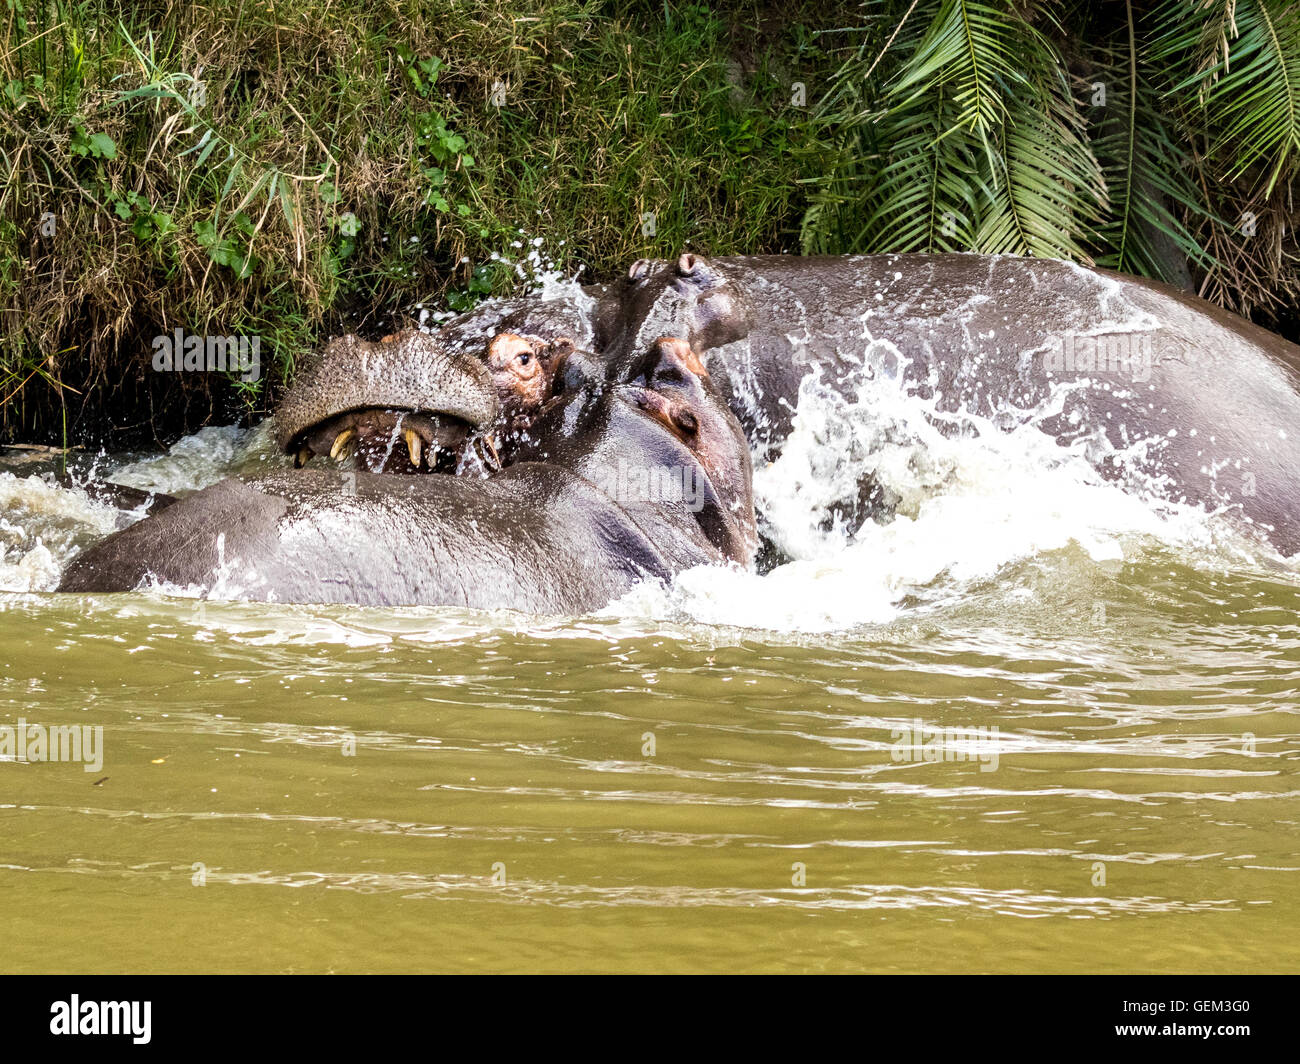 A Pair Of Bull Hippopotami (Hippopotamus amphibius) Fighting For Territory In The Bushman River Stock Photo